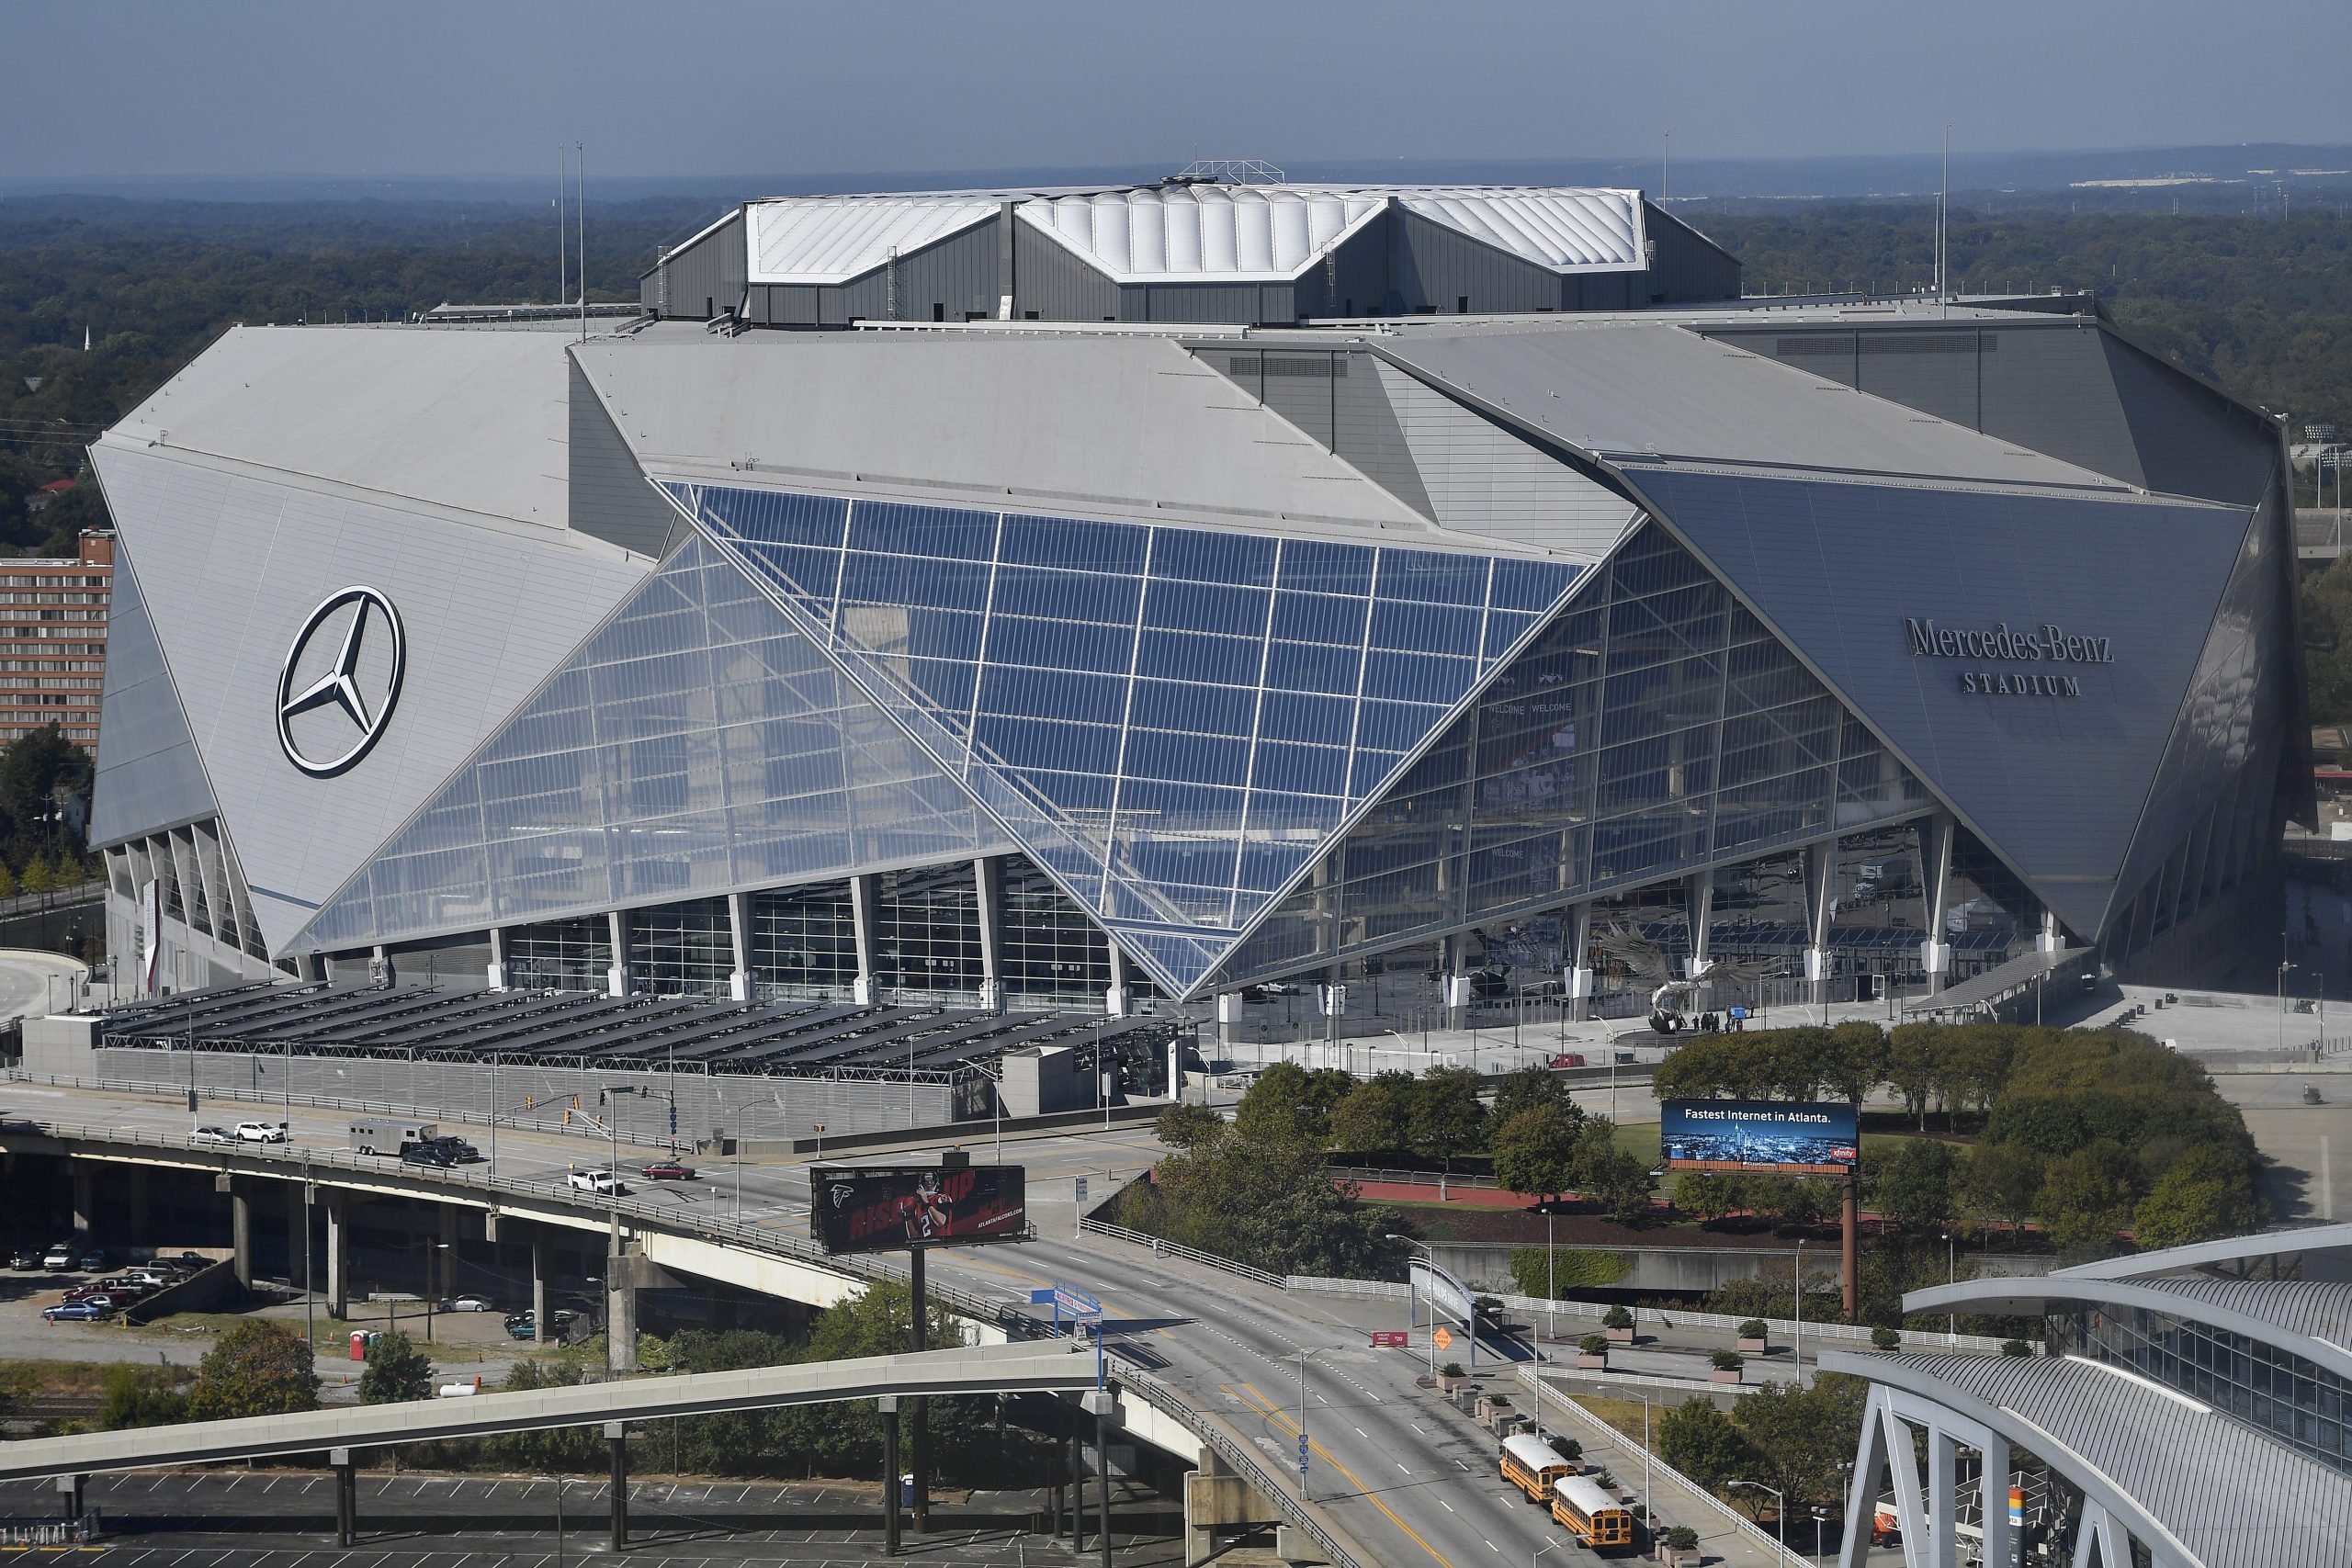 Atlanta selected as a 2026 World Cup host city